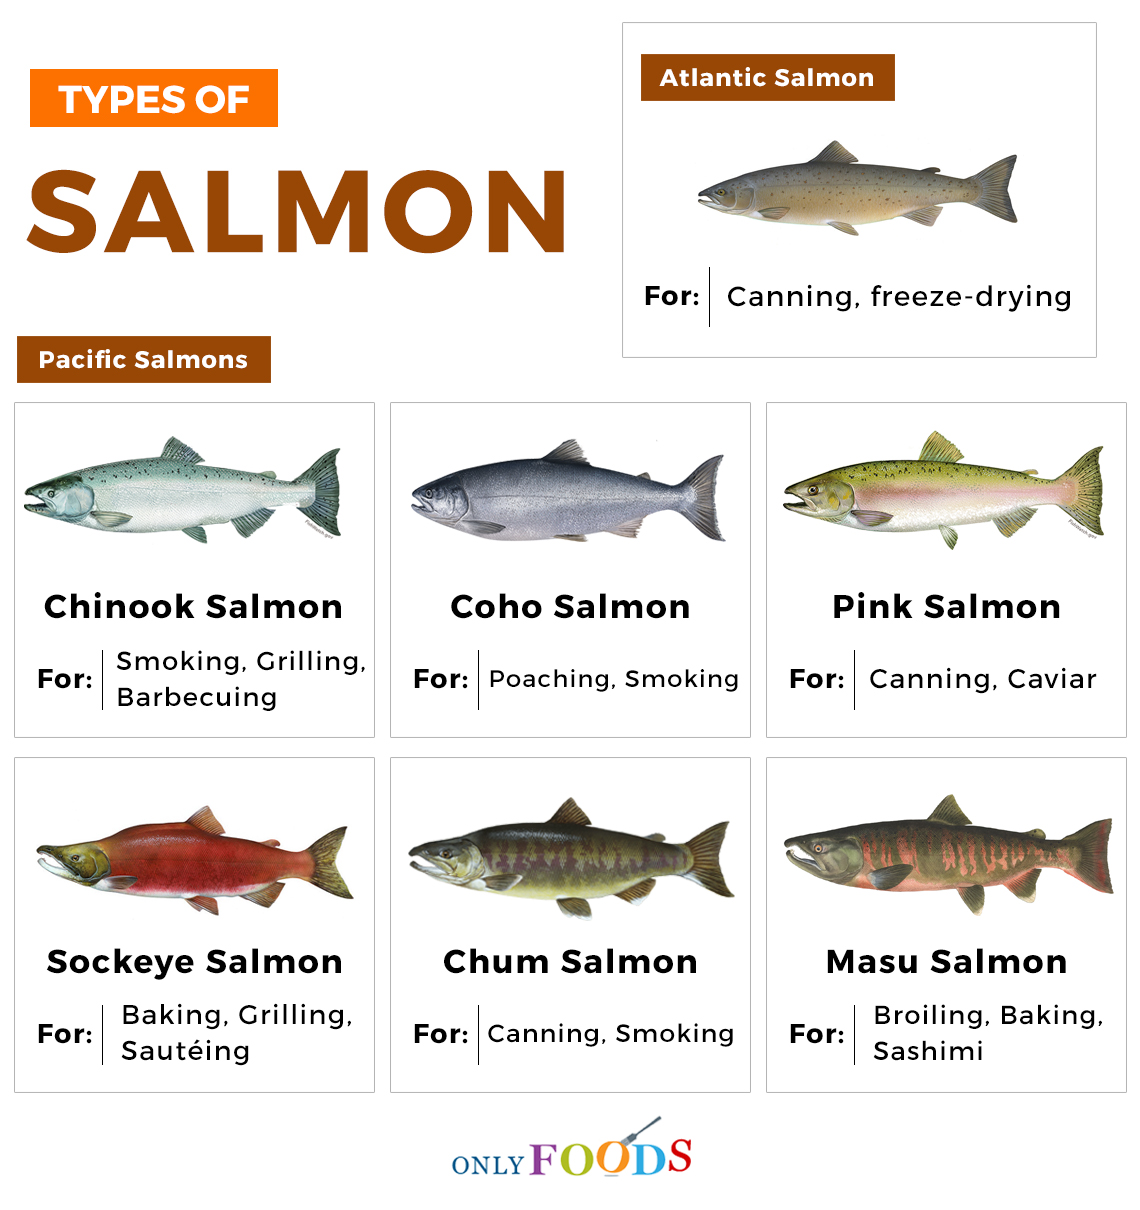 Wild salmon species